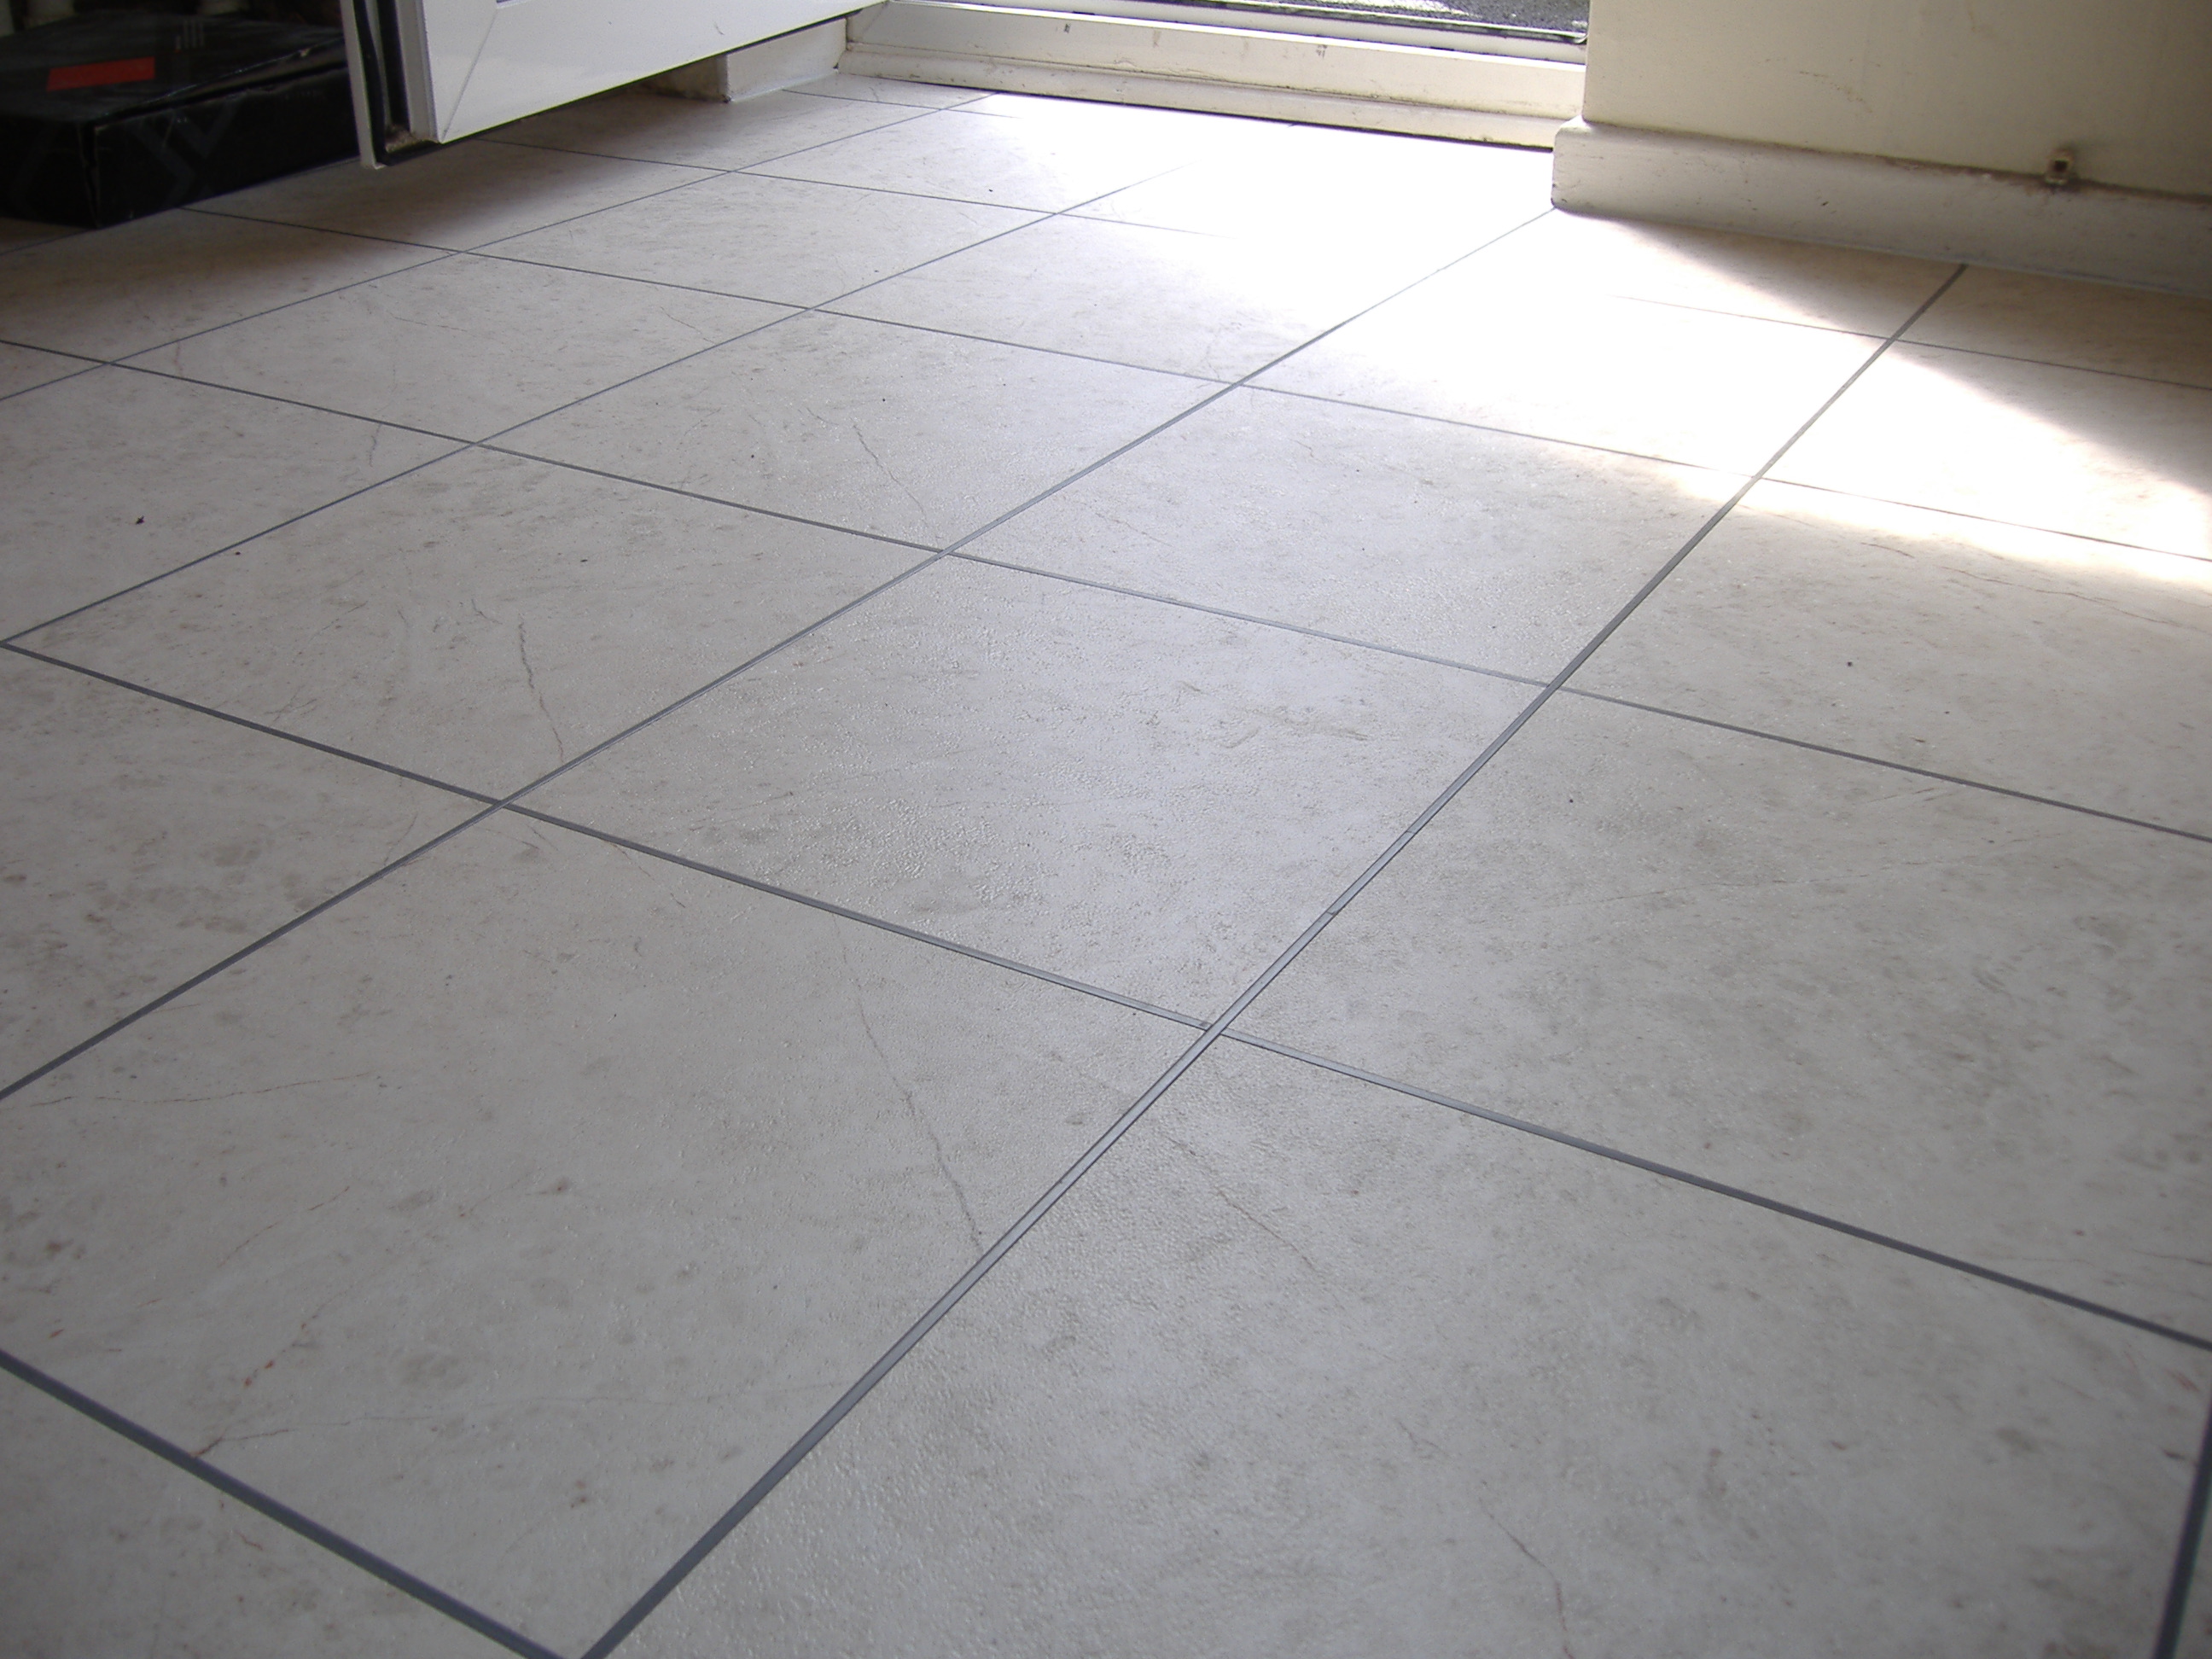 lino flooring tiles vinyl flooring tiles and kitchen flooring vinyl floors karndean tiles DWPBRHR